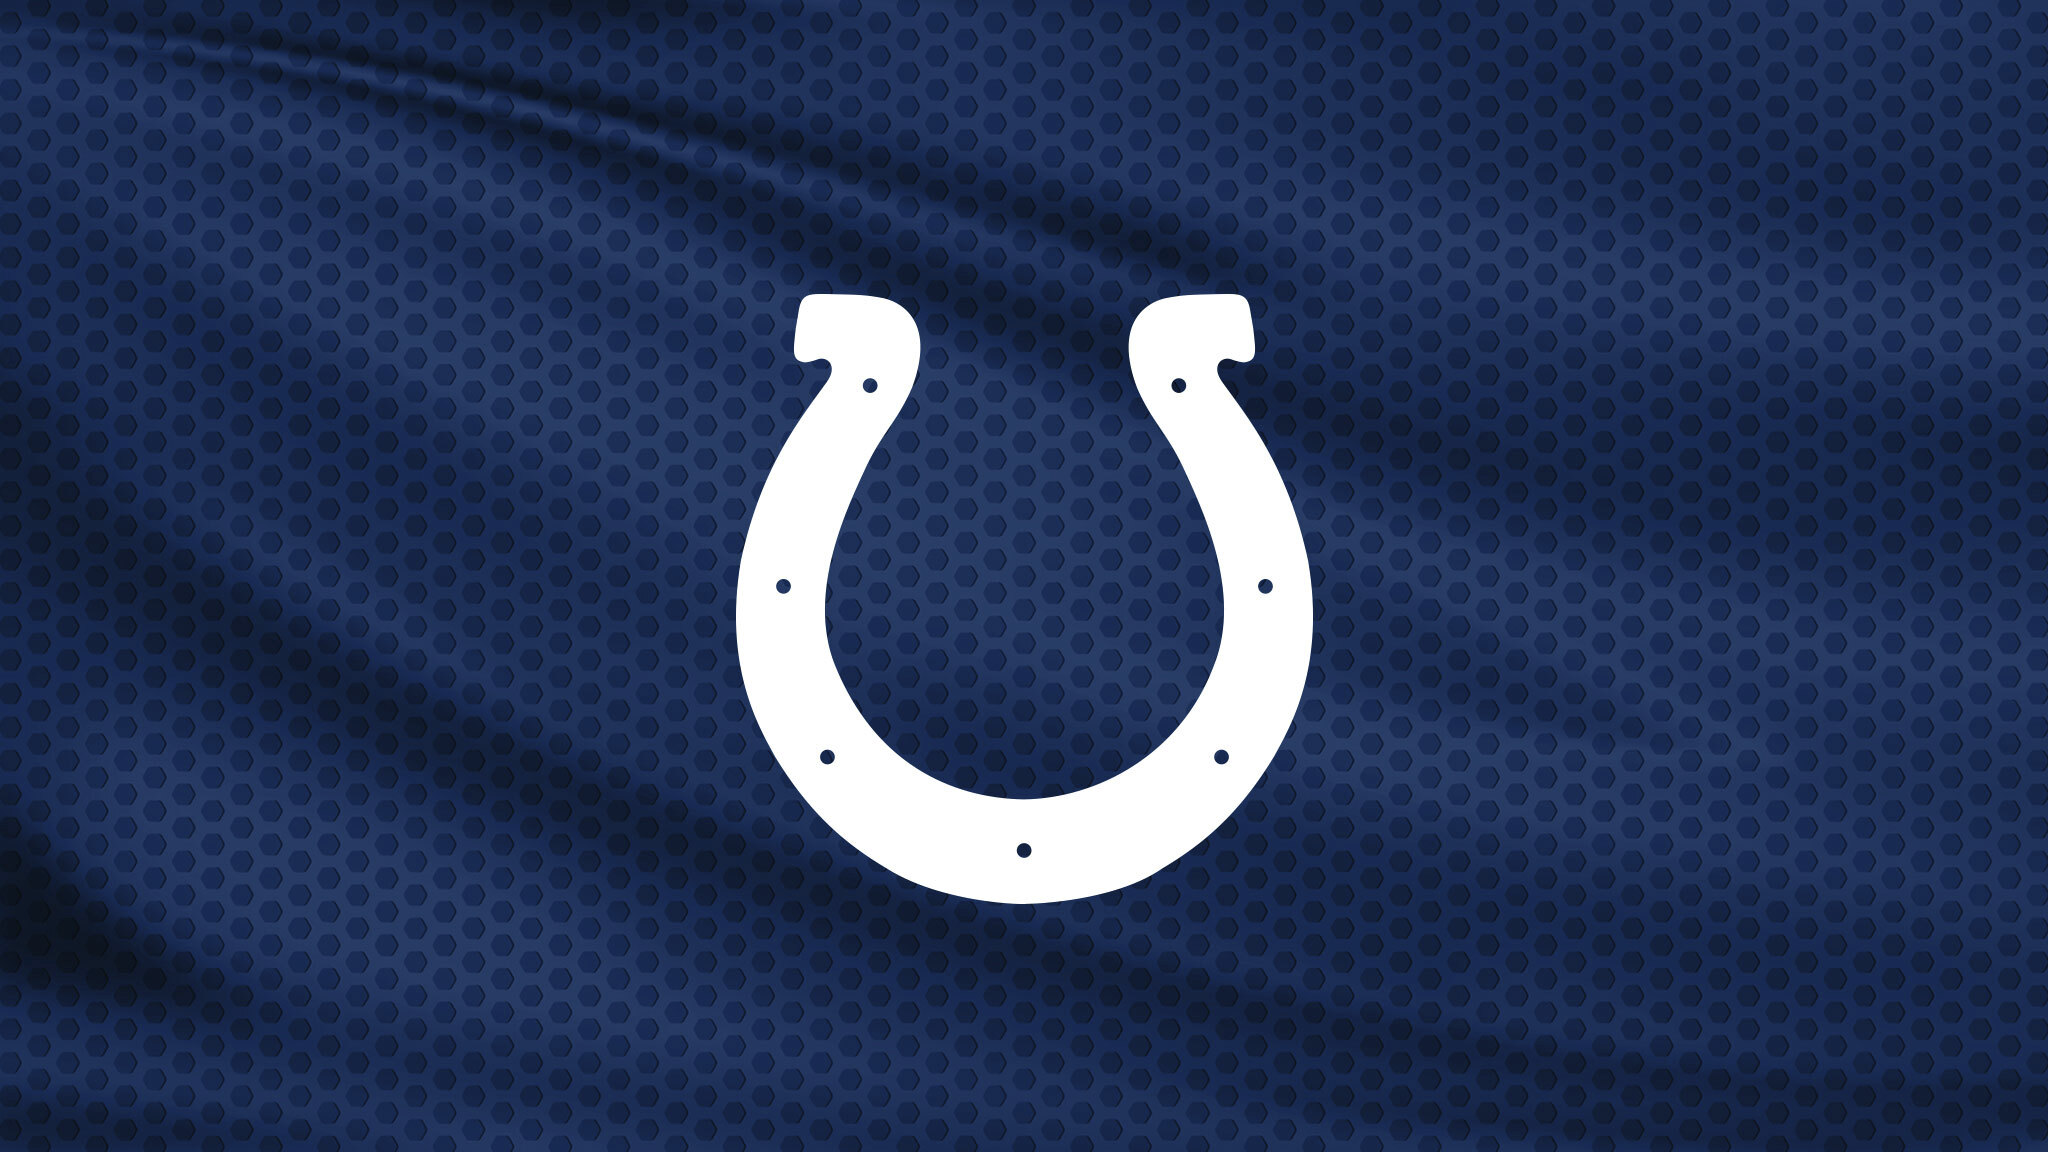 Indianapolis Colts V Denver Broncos - Preseason Game